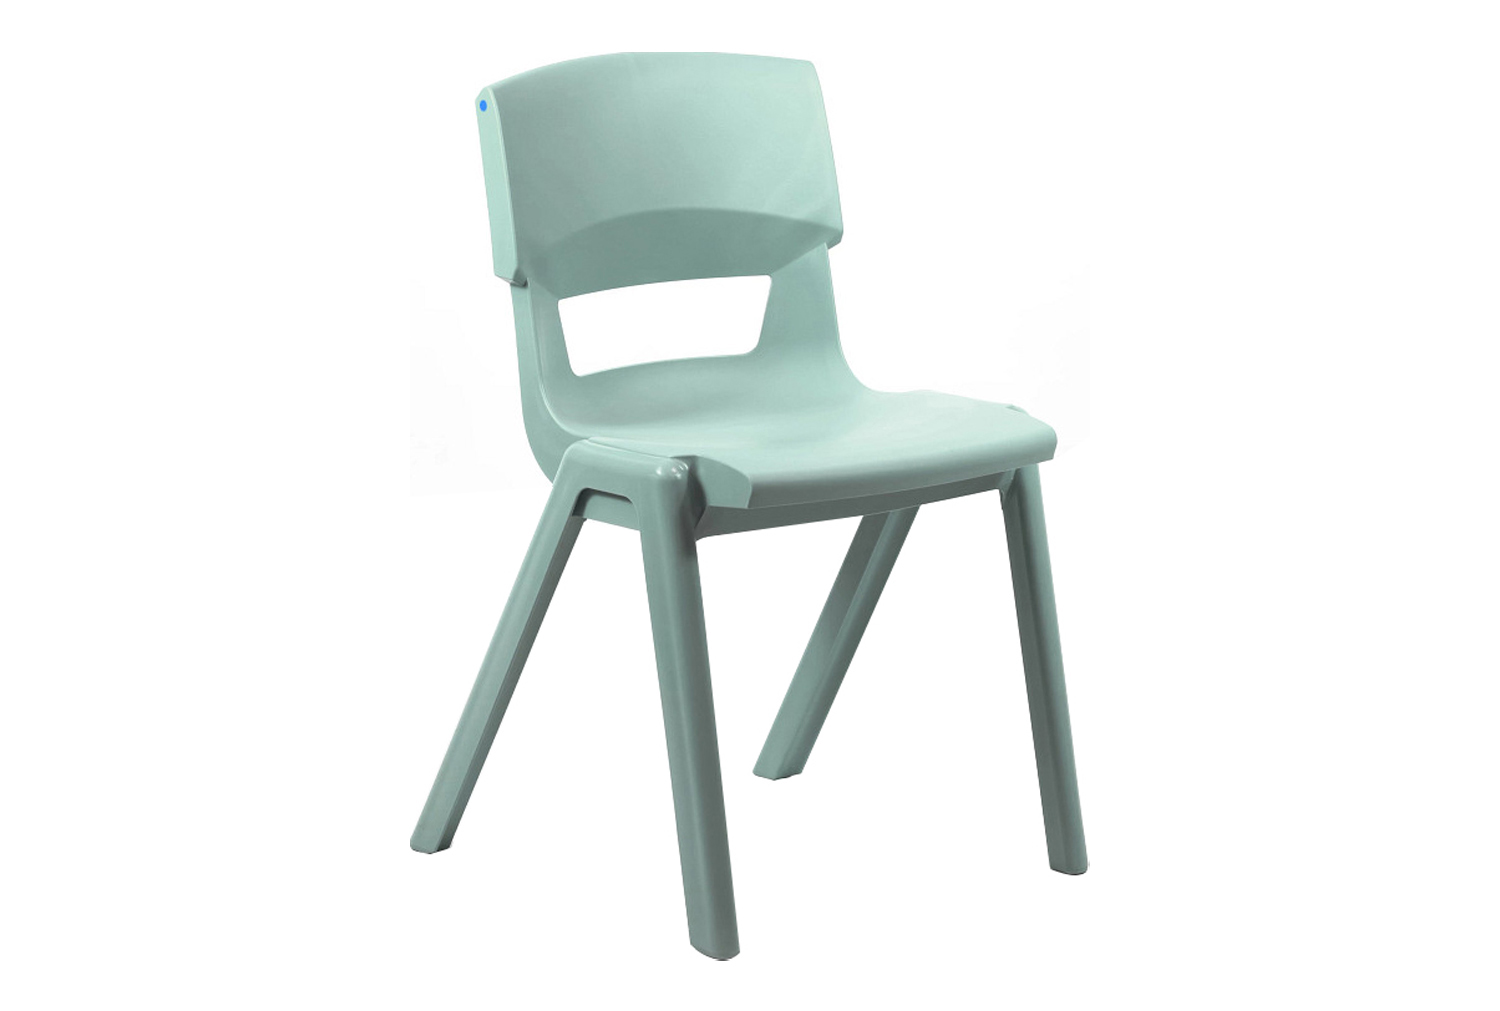 Postura+ Classroom Chair, 11-14 Years - 38wx37dx43h (cm), Hazy Jade